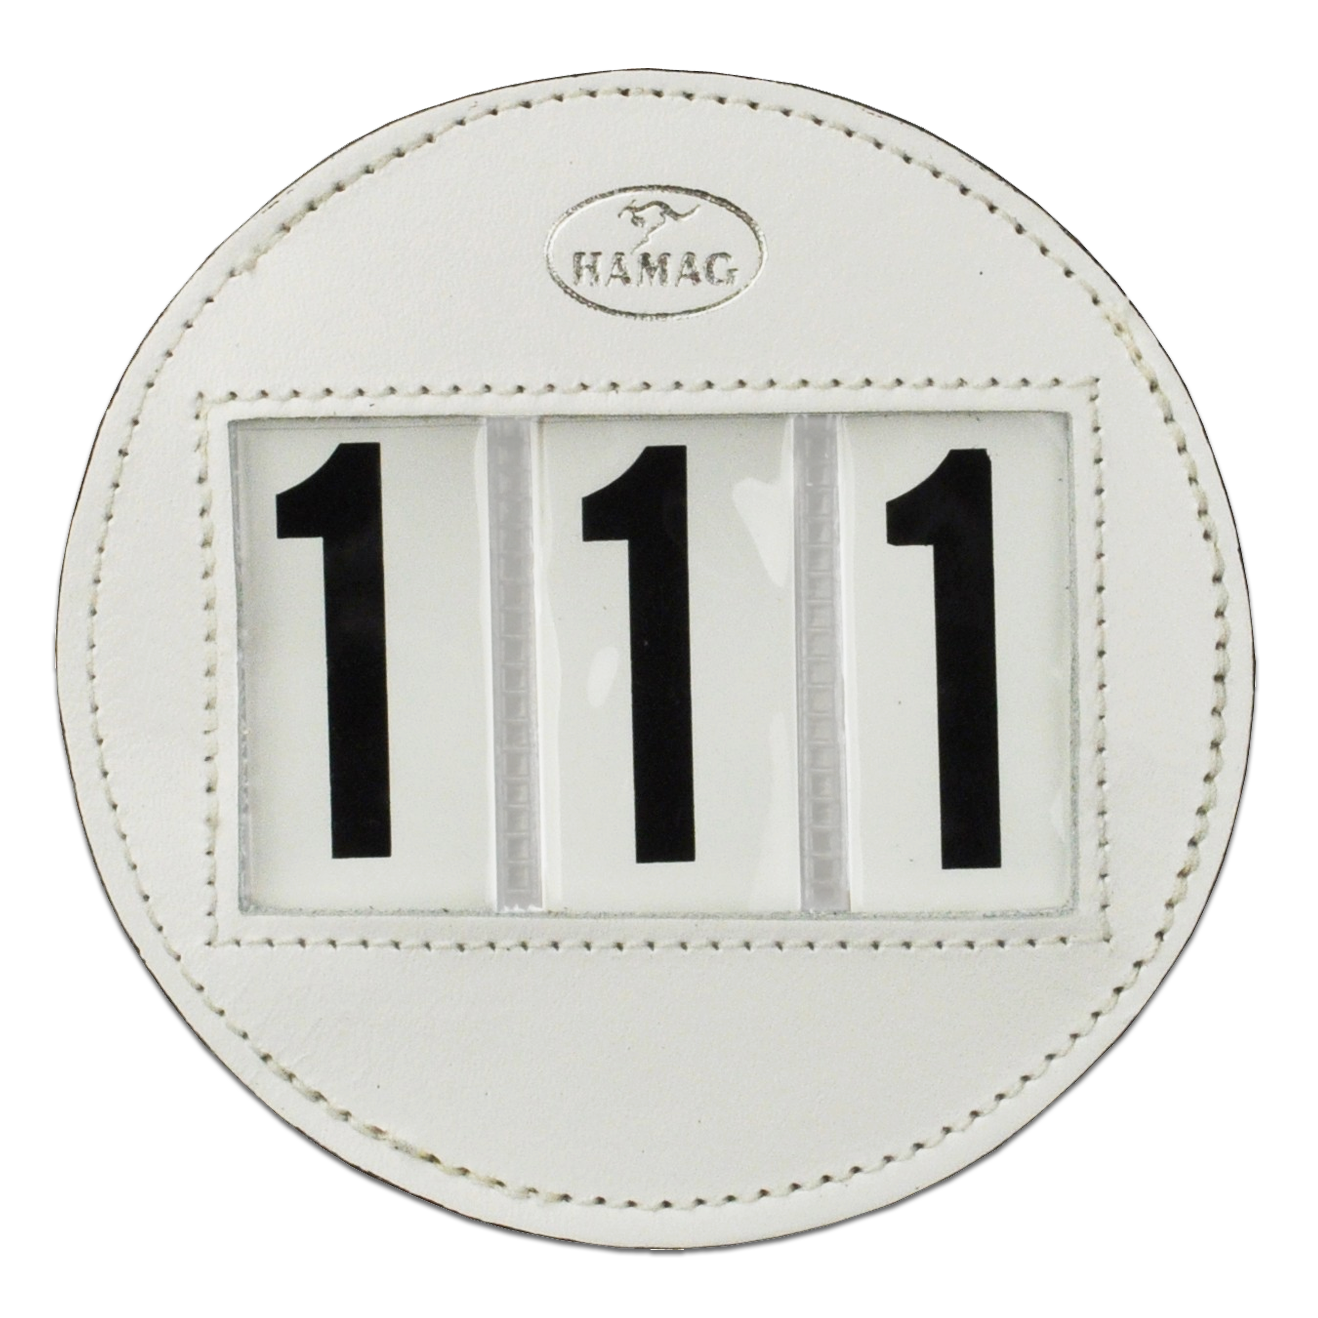 Hamag™ Round Leather Saddle Cloth Number Holders (Pair) – White 4 Digit